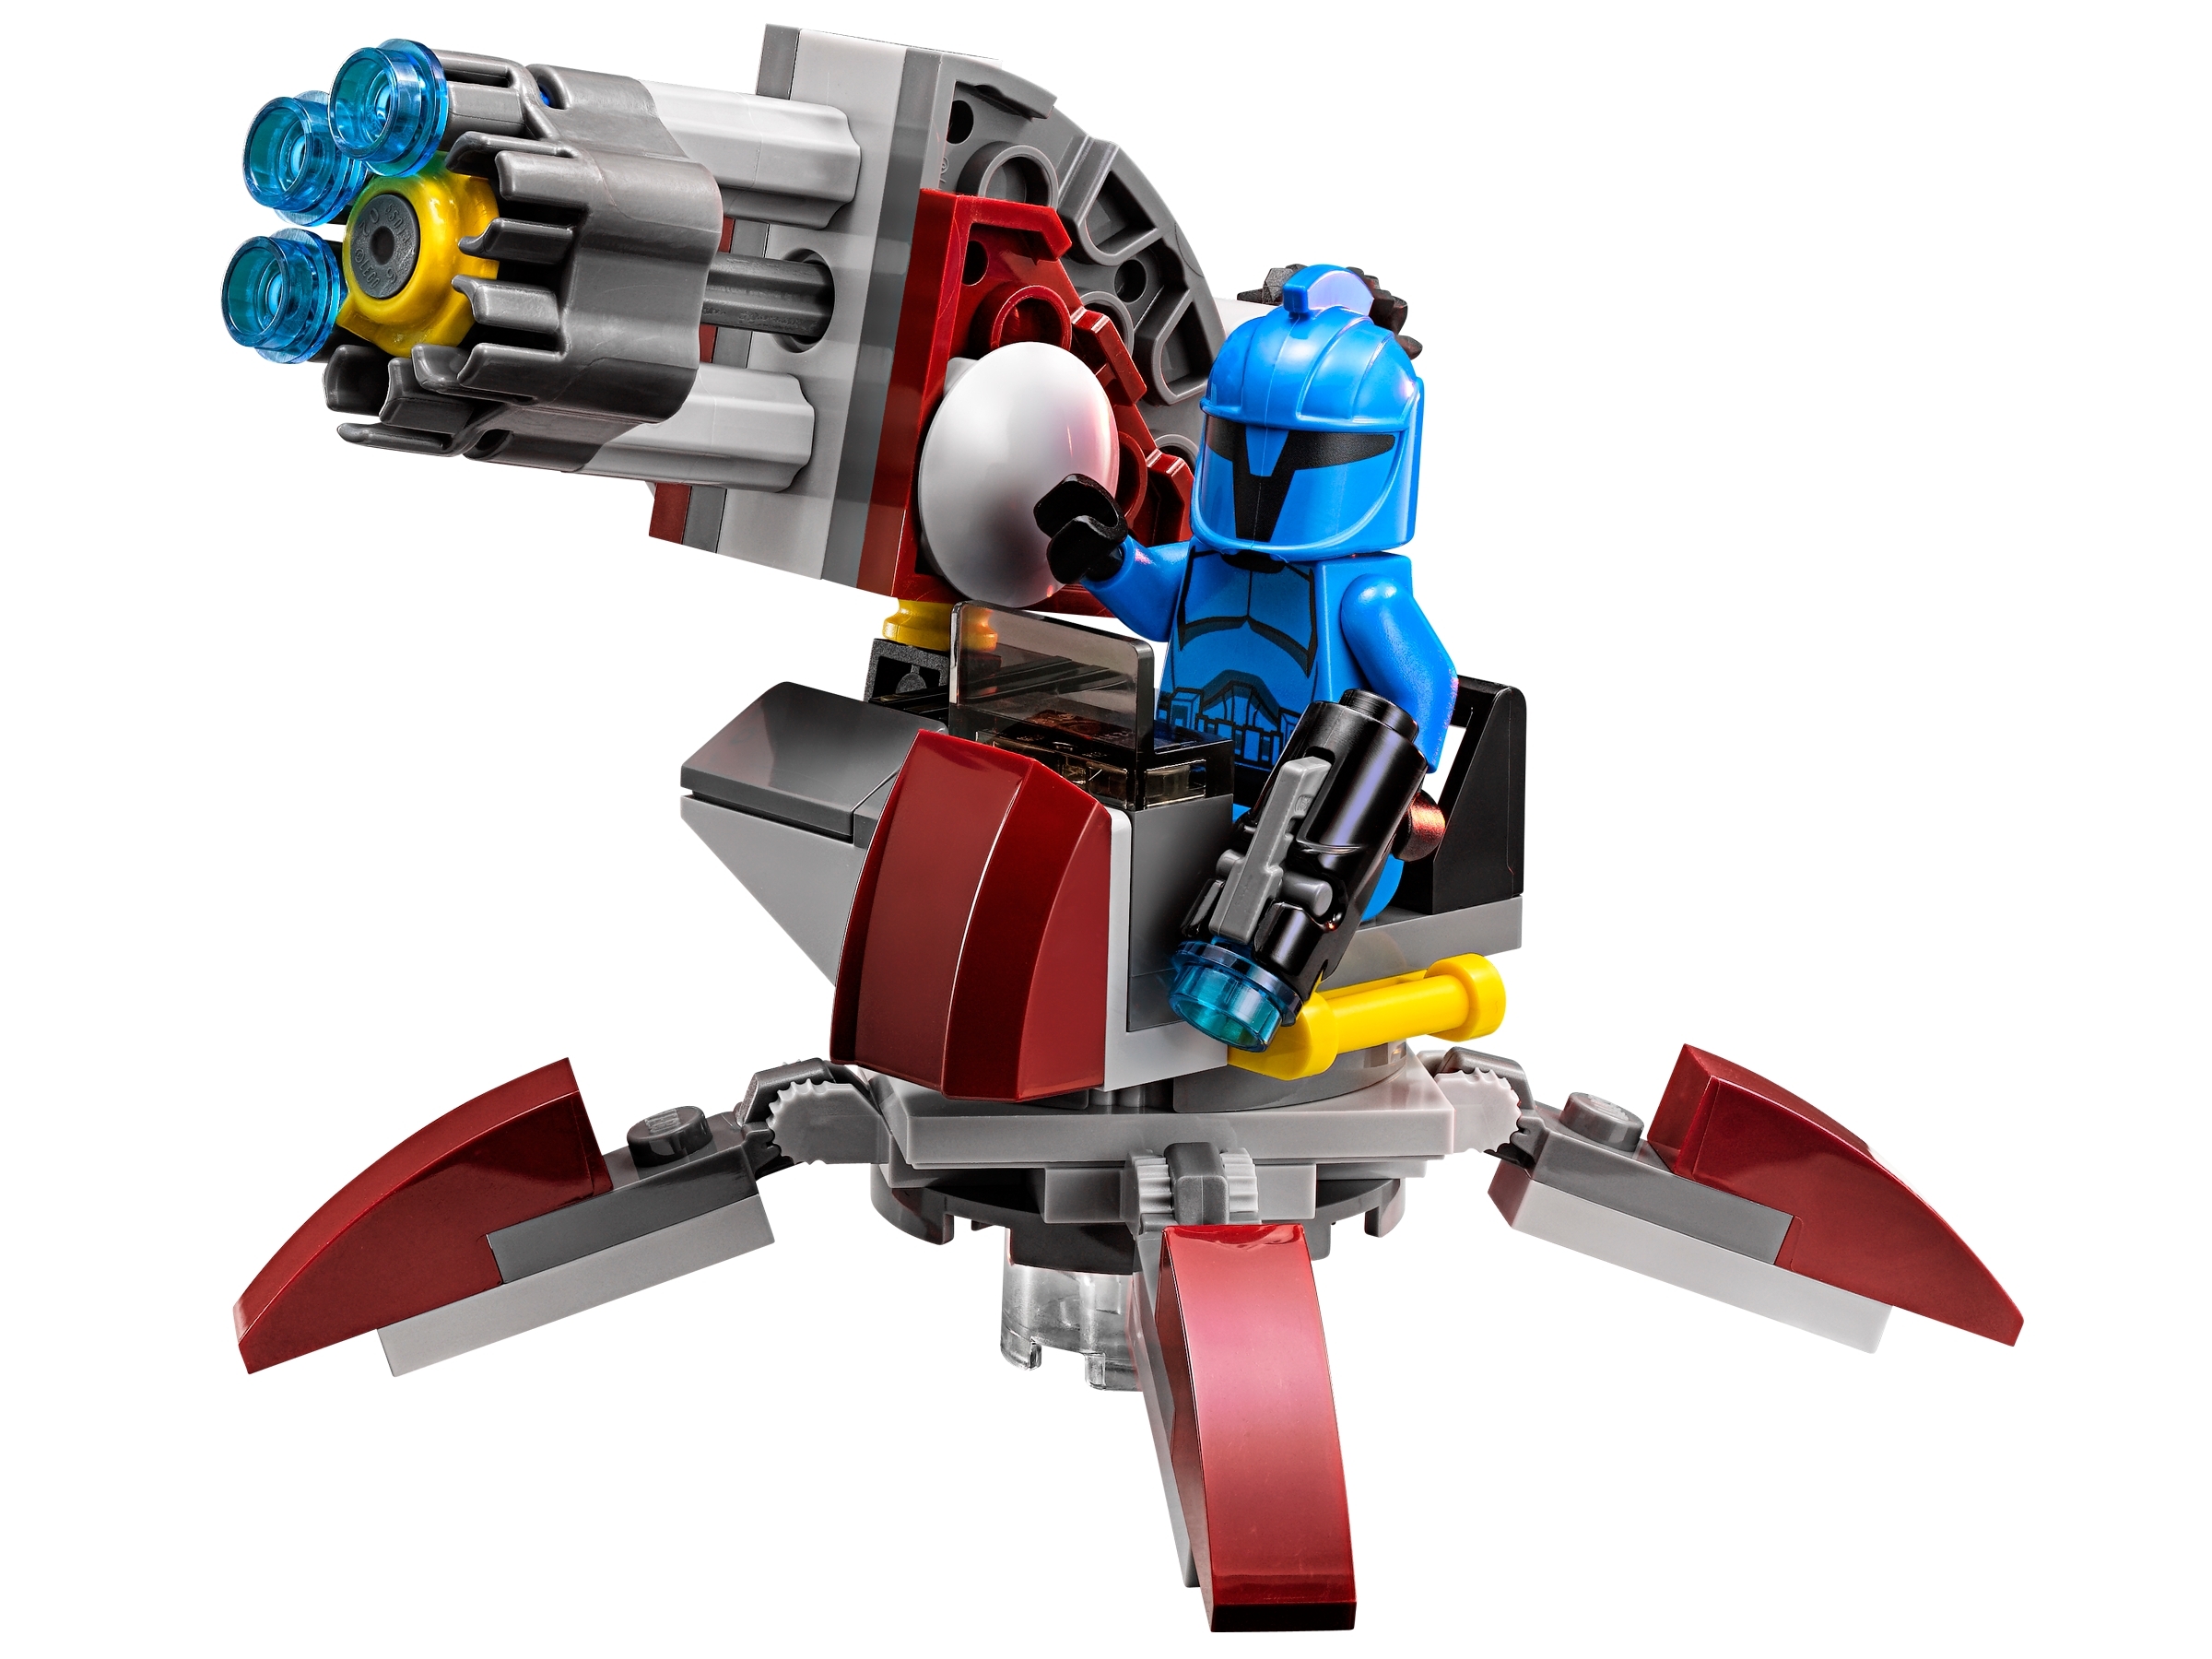 LEGO STAR WARS set 75088 SENATE COMMANDO TROOPERS complete 4 minifigures no box